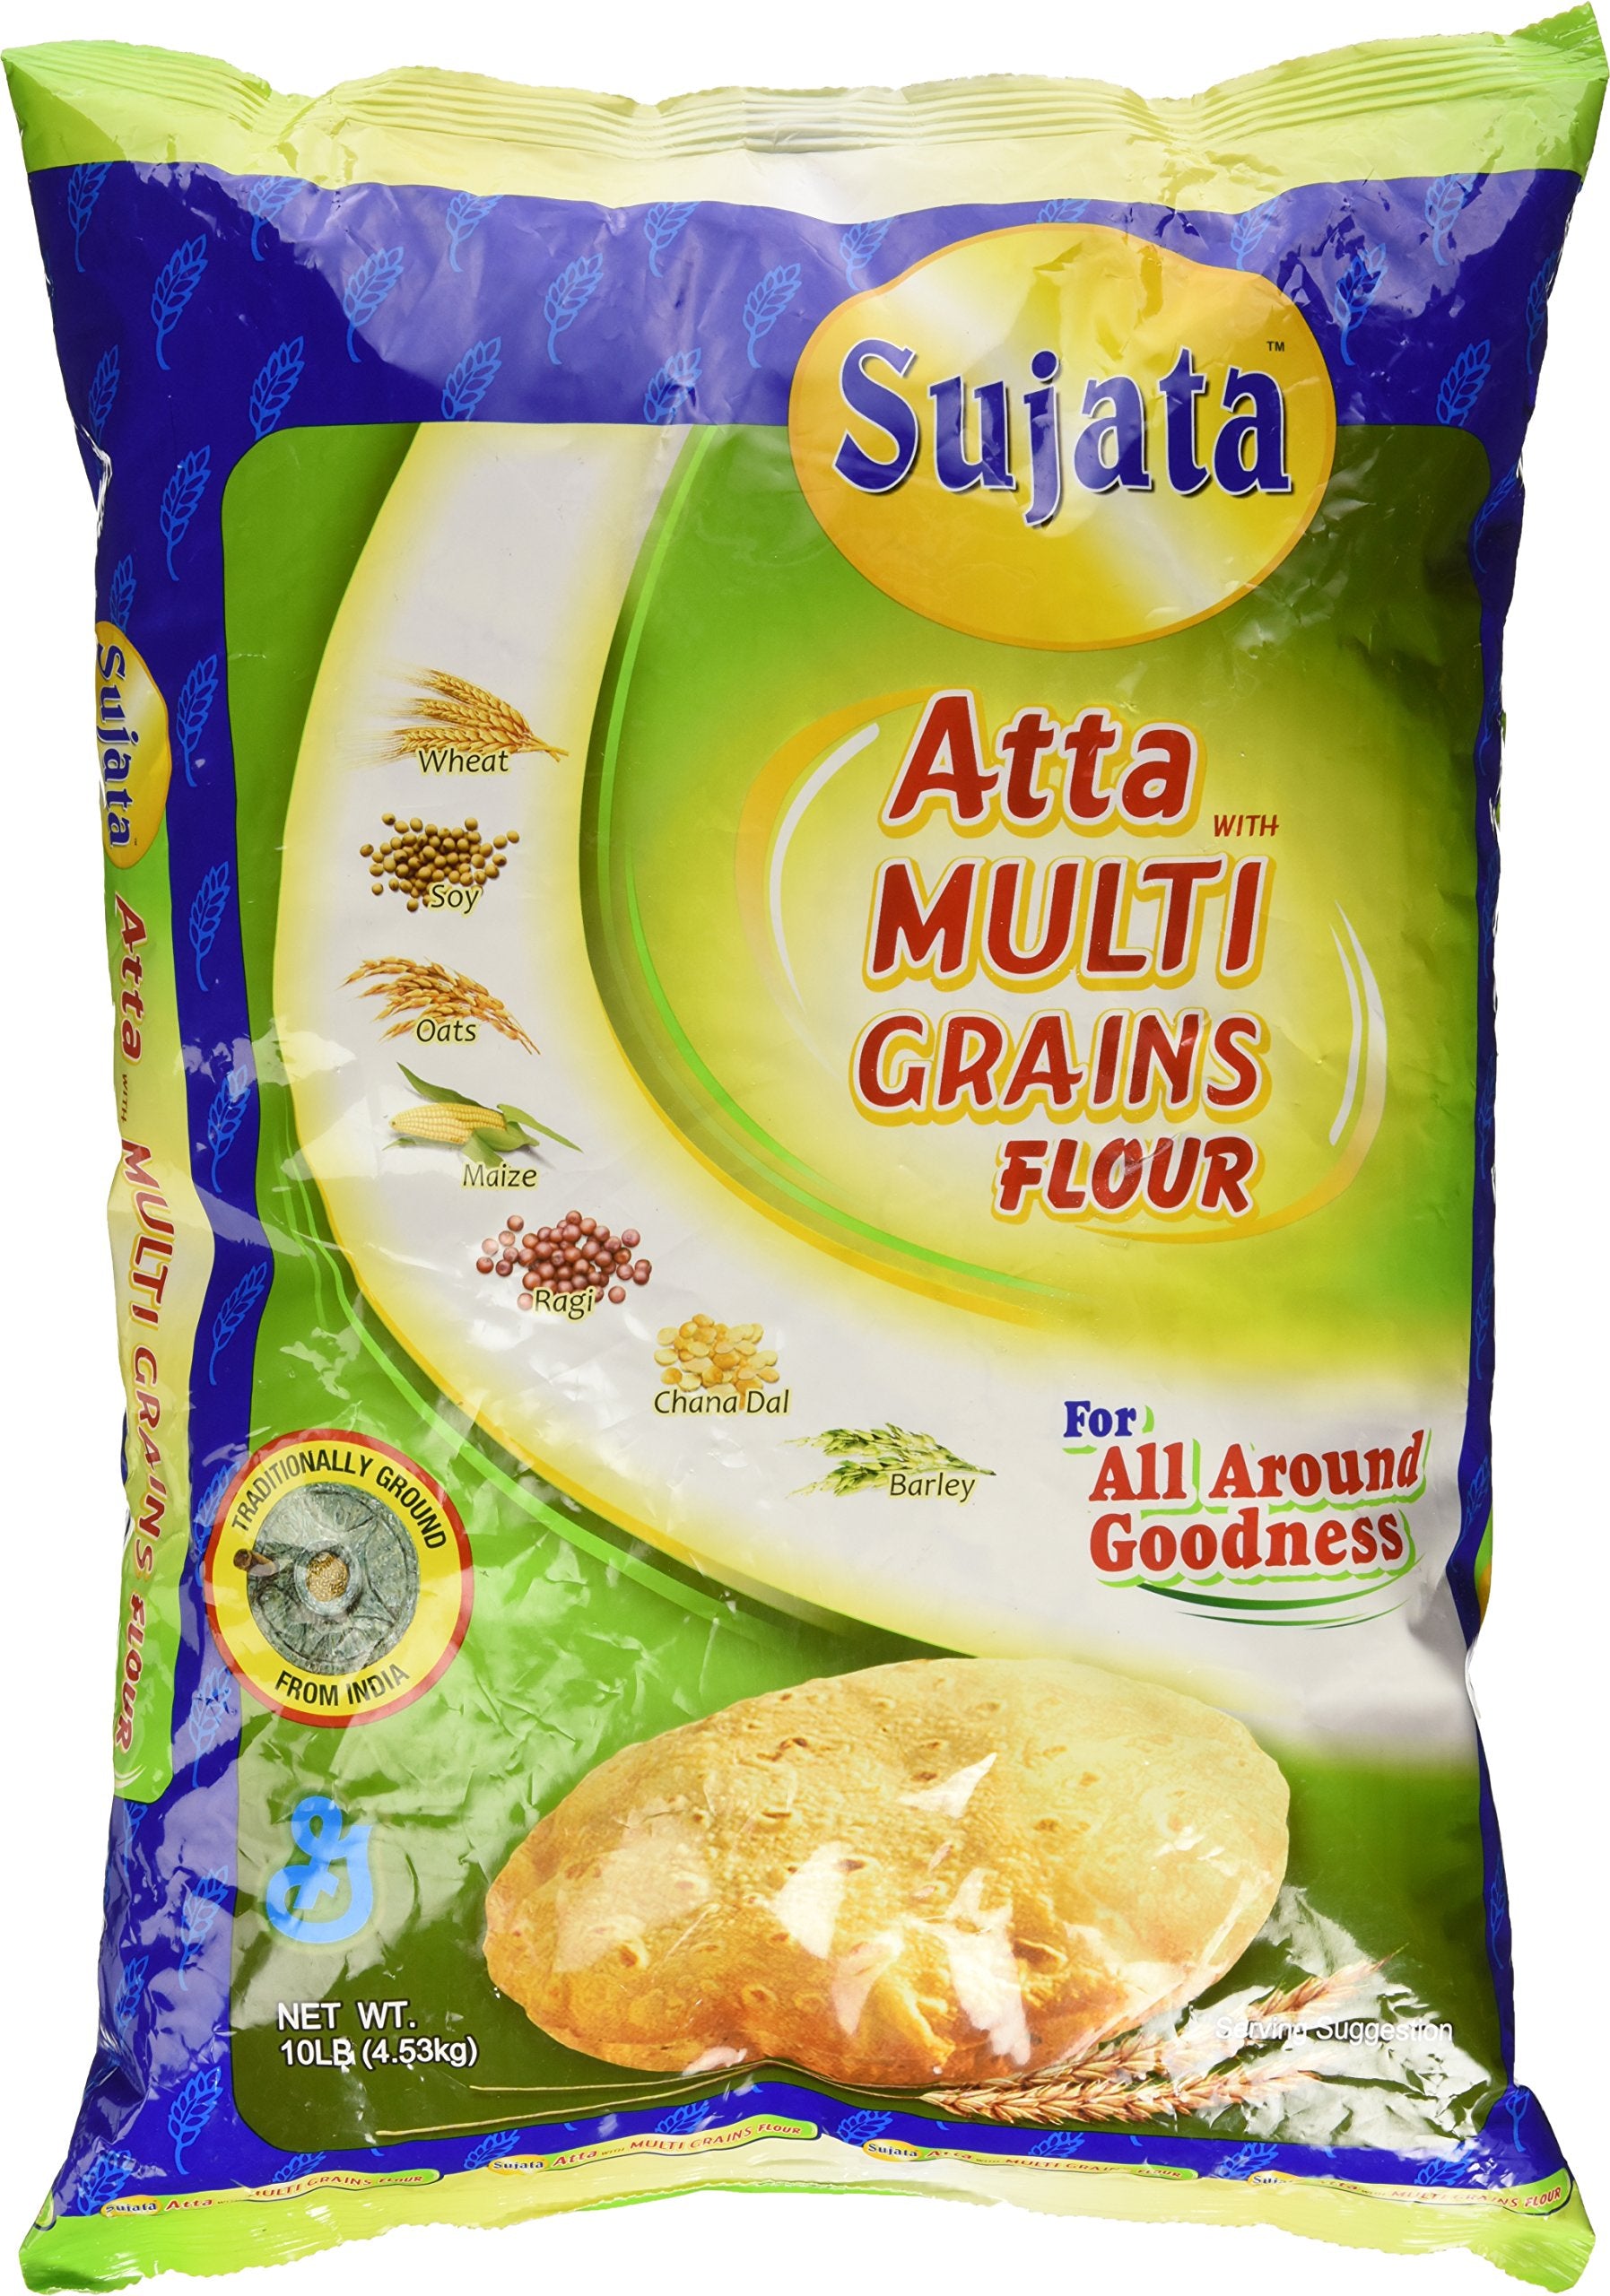 Pillsbury (Sujata) Atta with Multi-Grains Flour 10lb